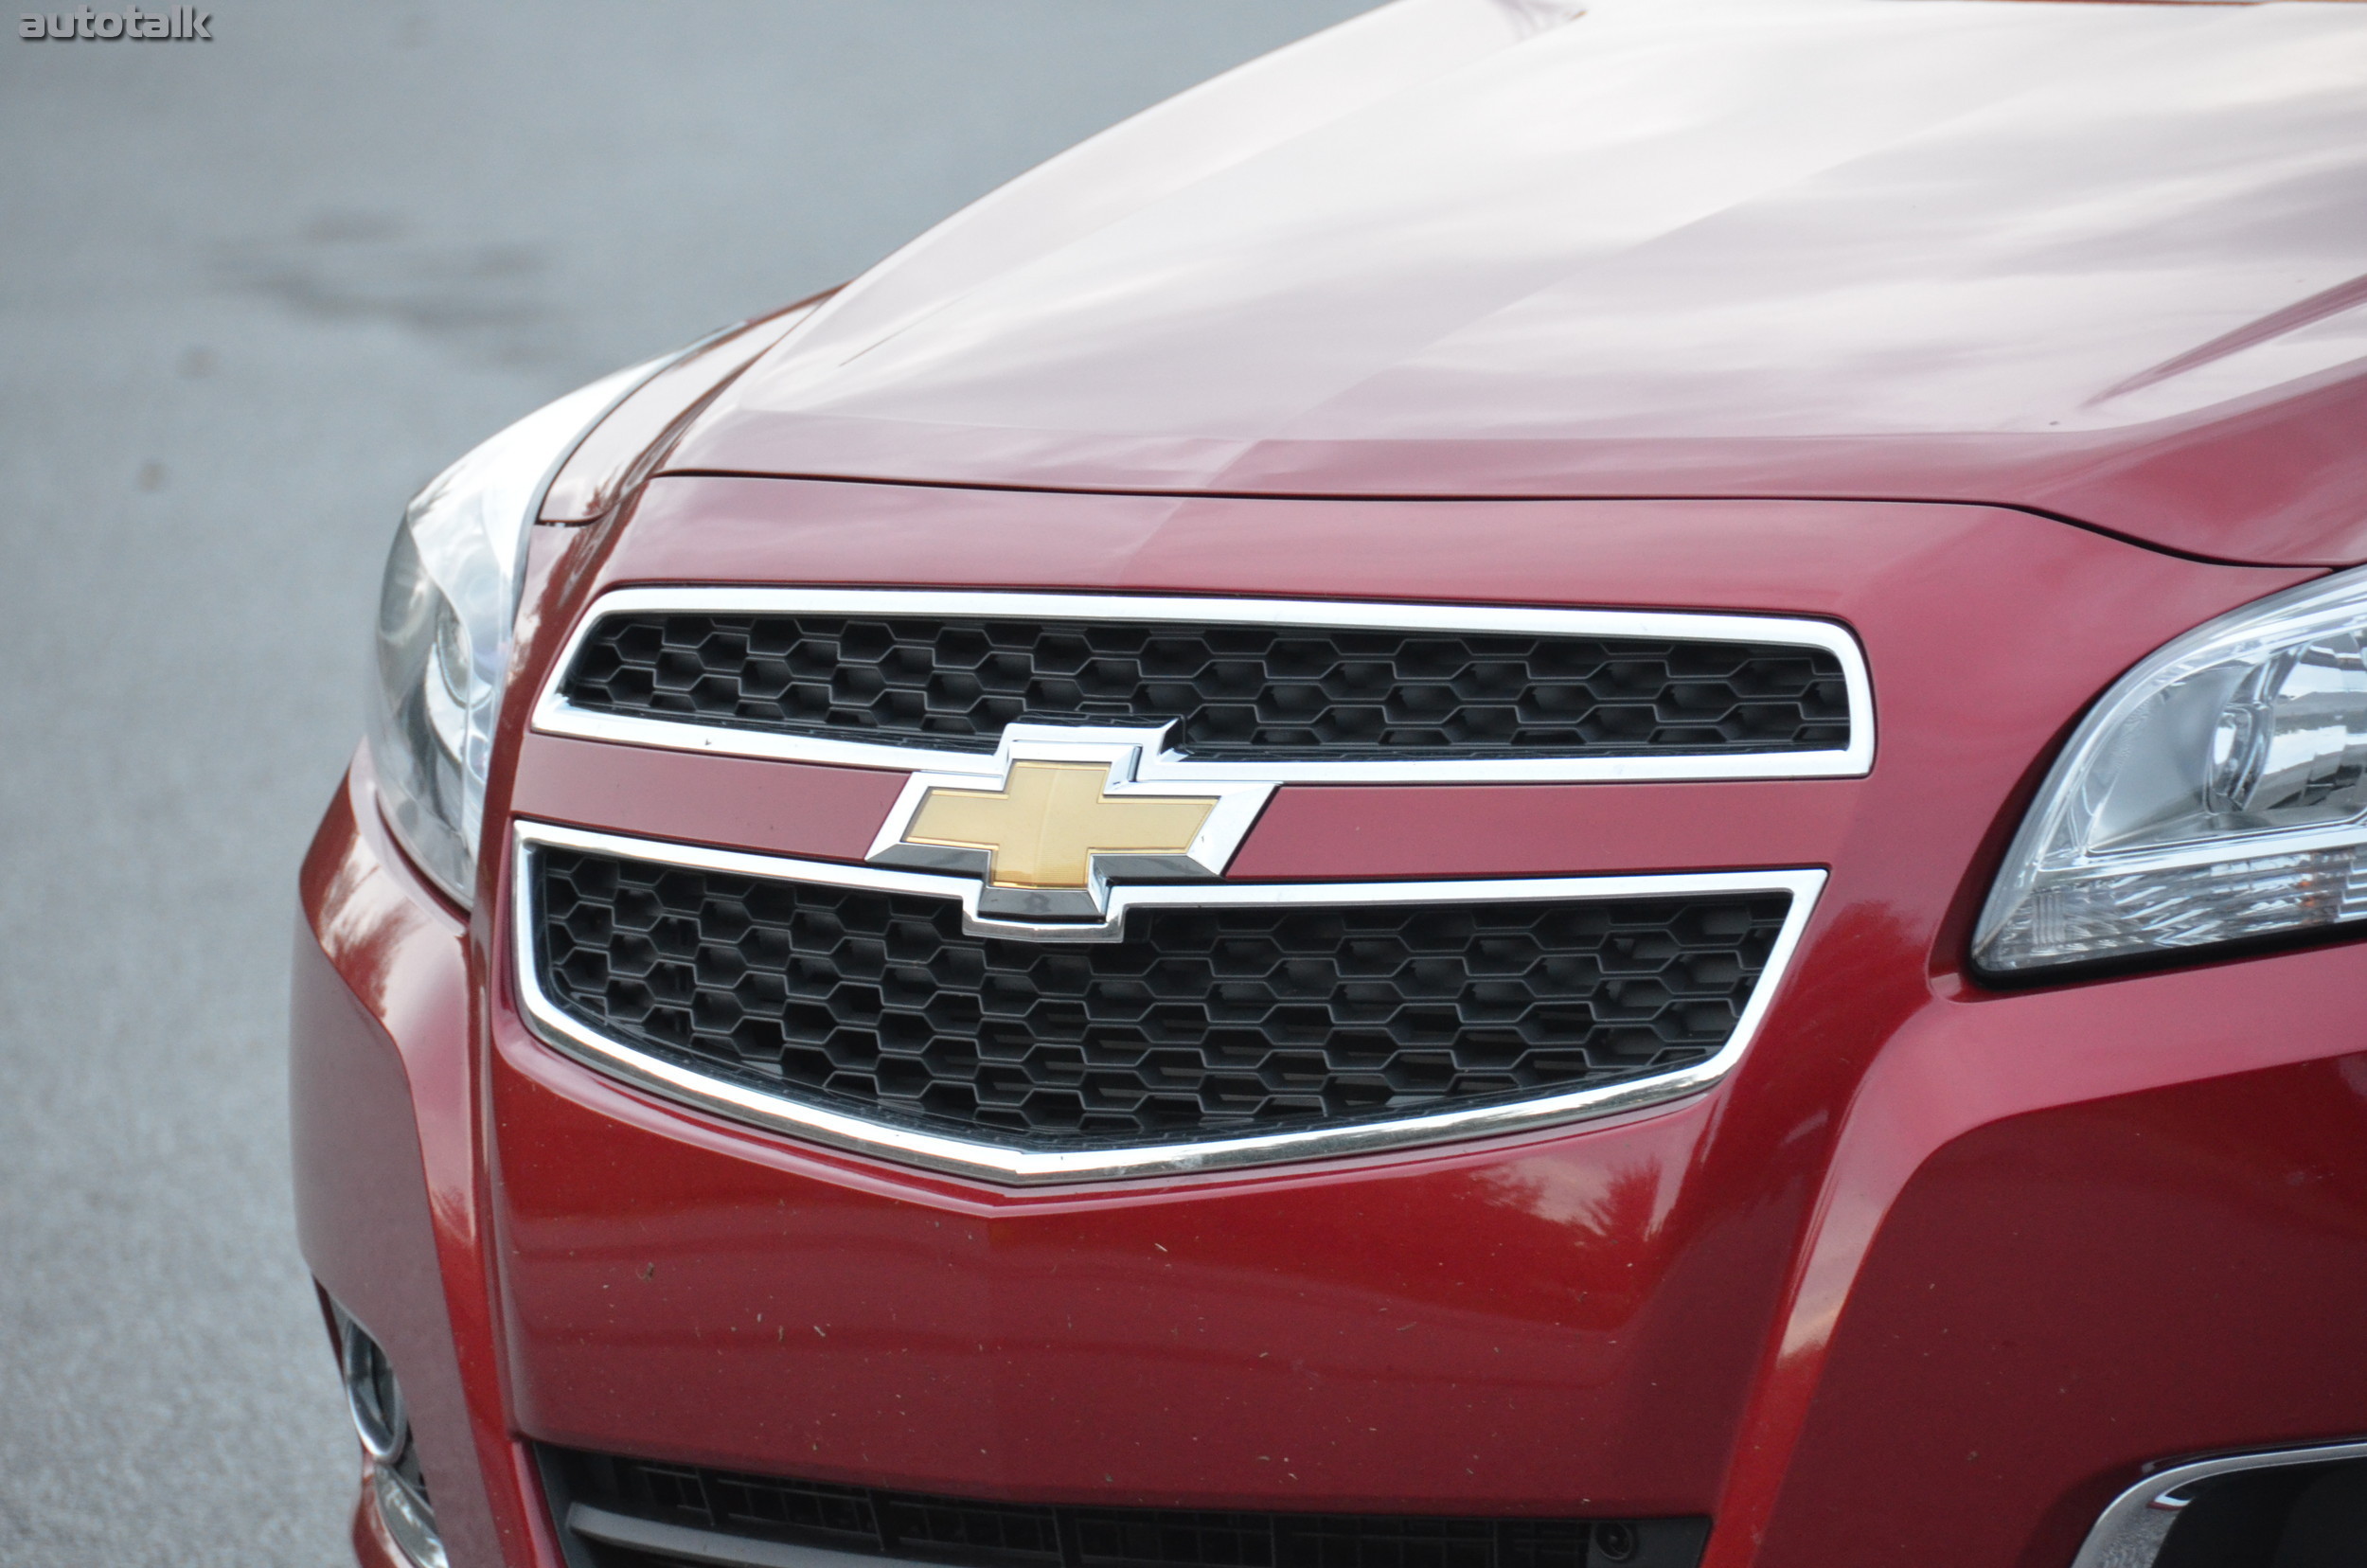 2013 Chevrolet Malibu Eco Review